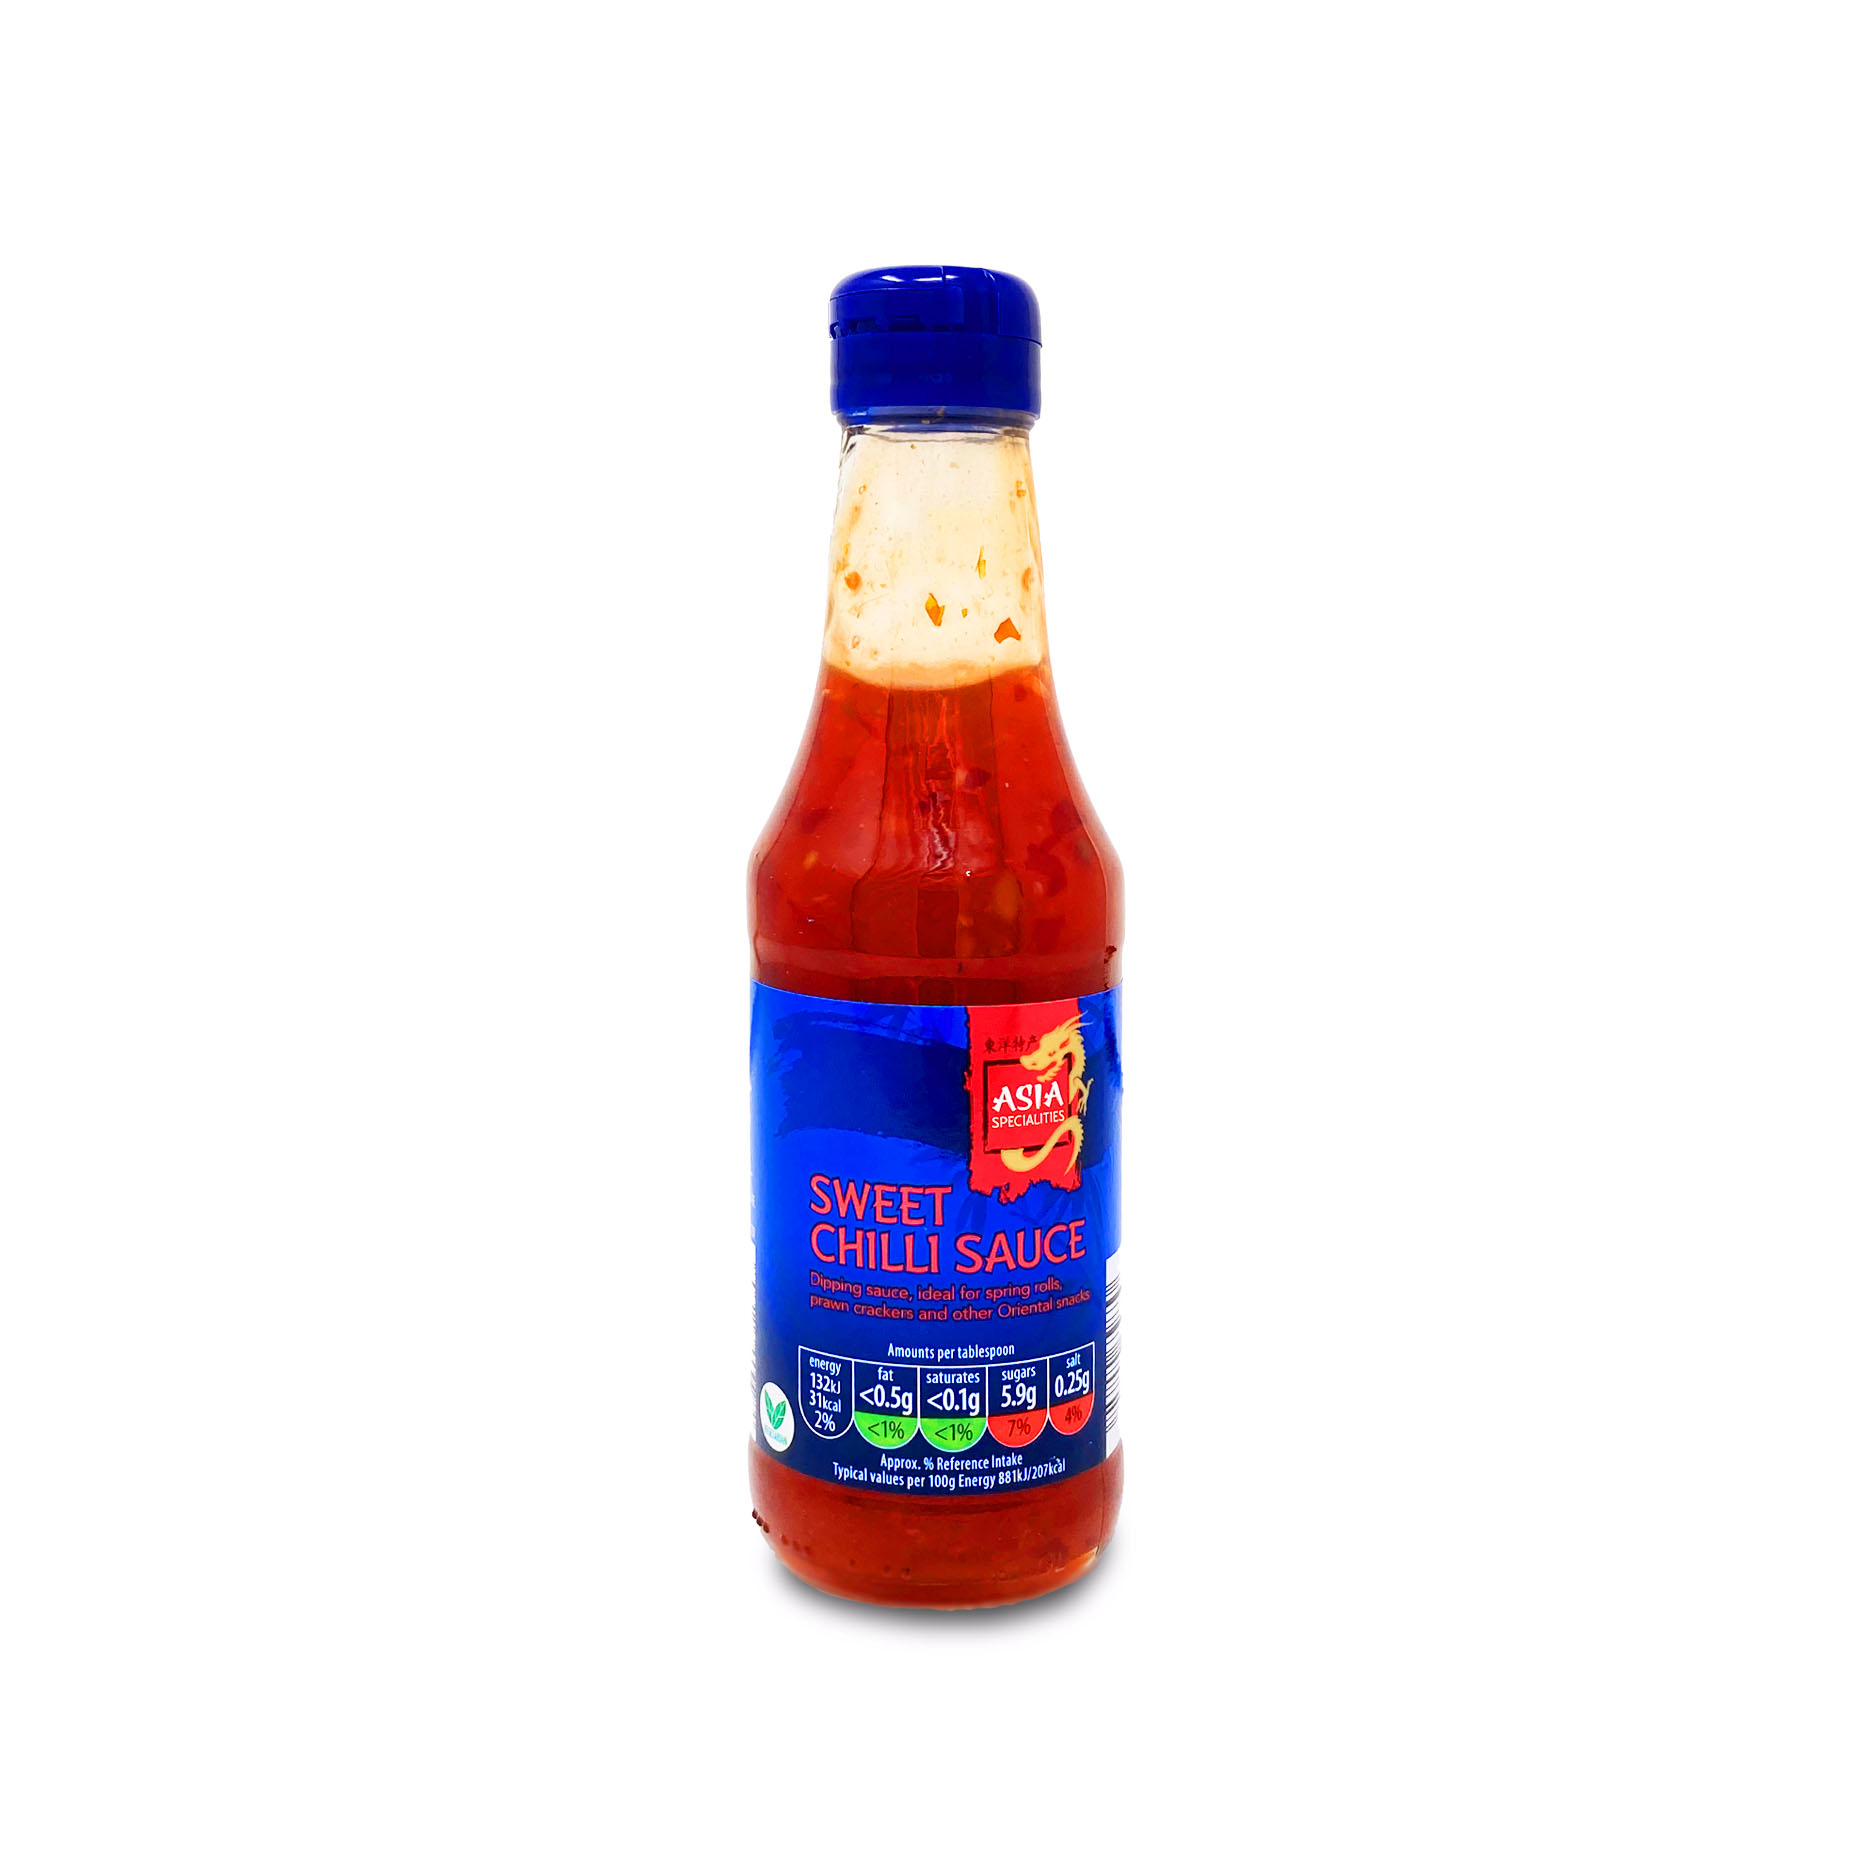 Asia Specialities Sweet Chilli Sauce 300g | ALDI